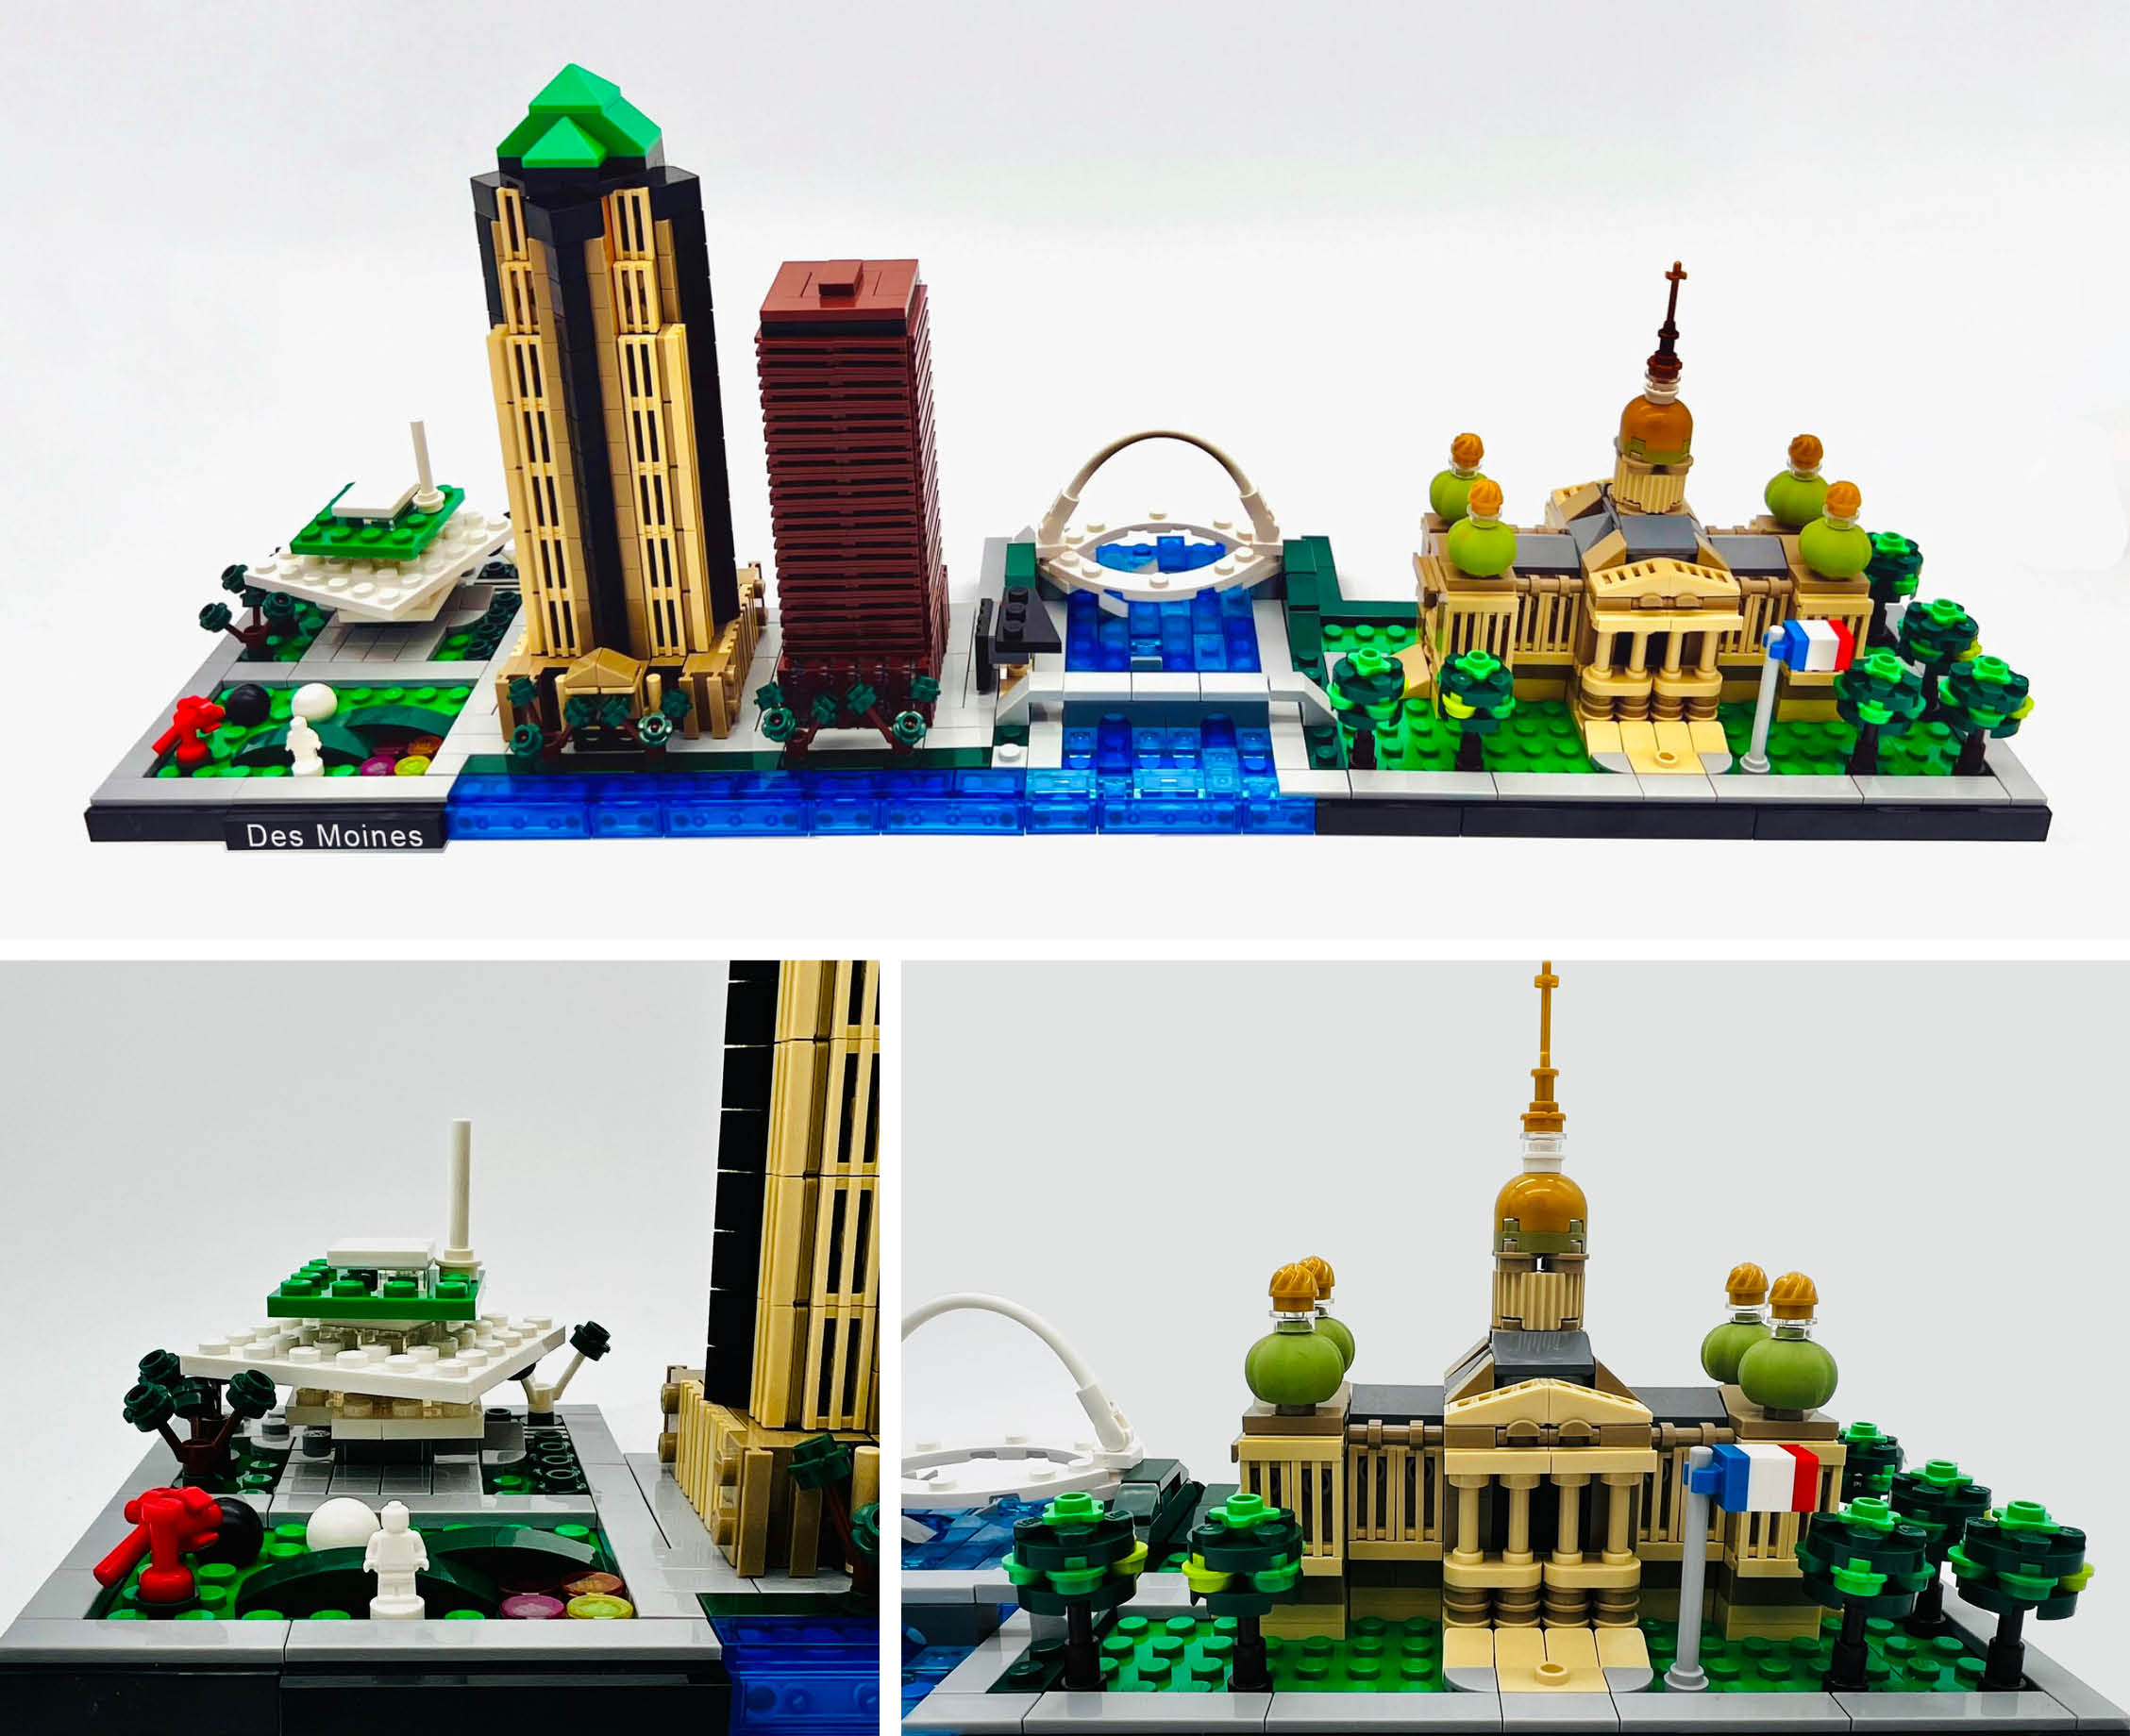 DSM in Legos: Local architect designs, builds Des Moines skyline Lego set